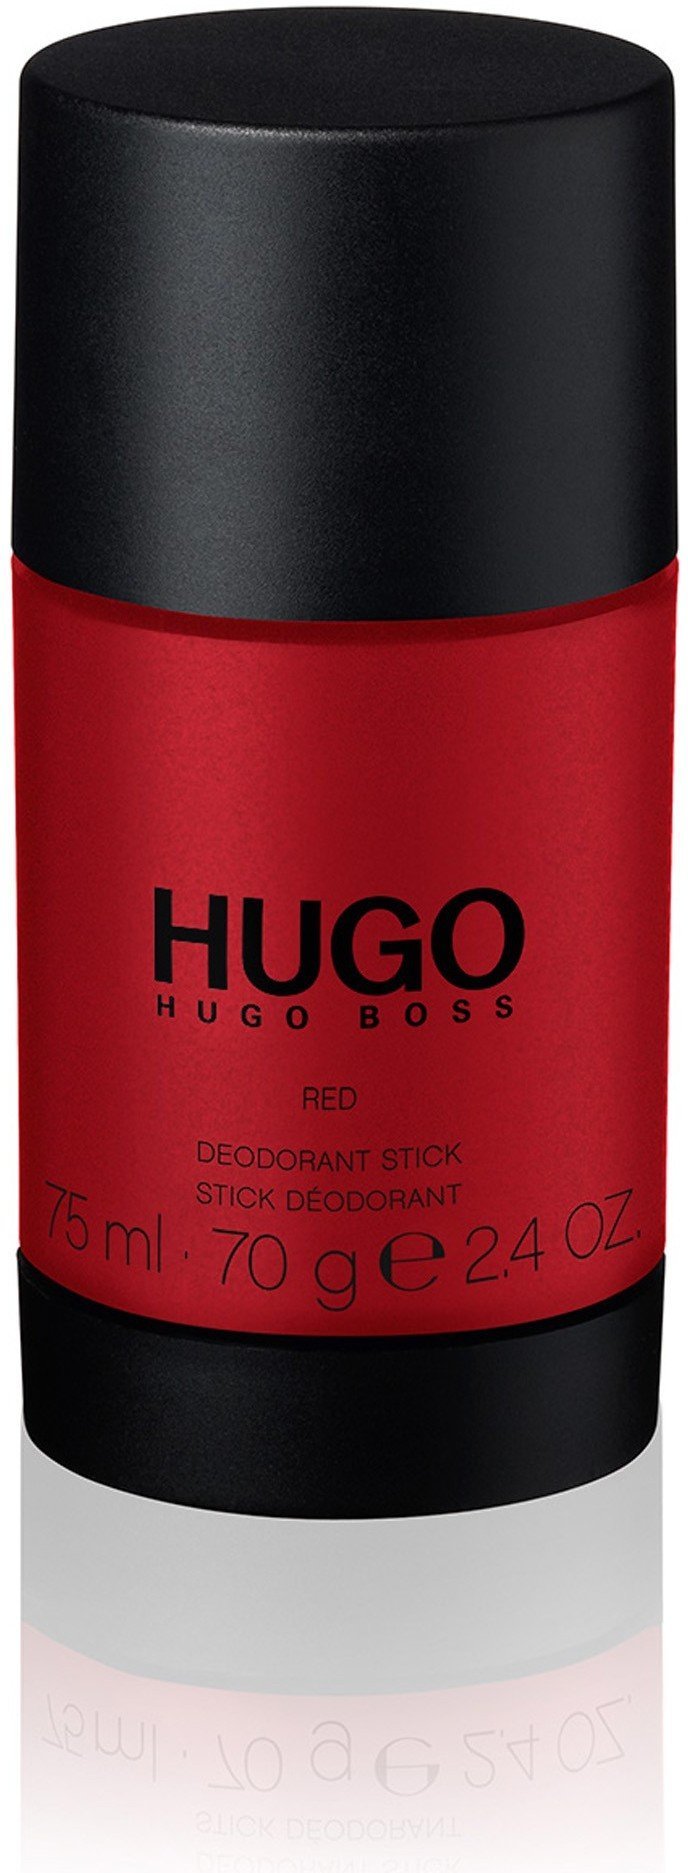 Boss Hugo Red Deodorant Stick 75ml in 